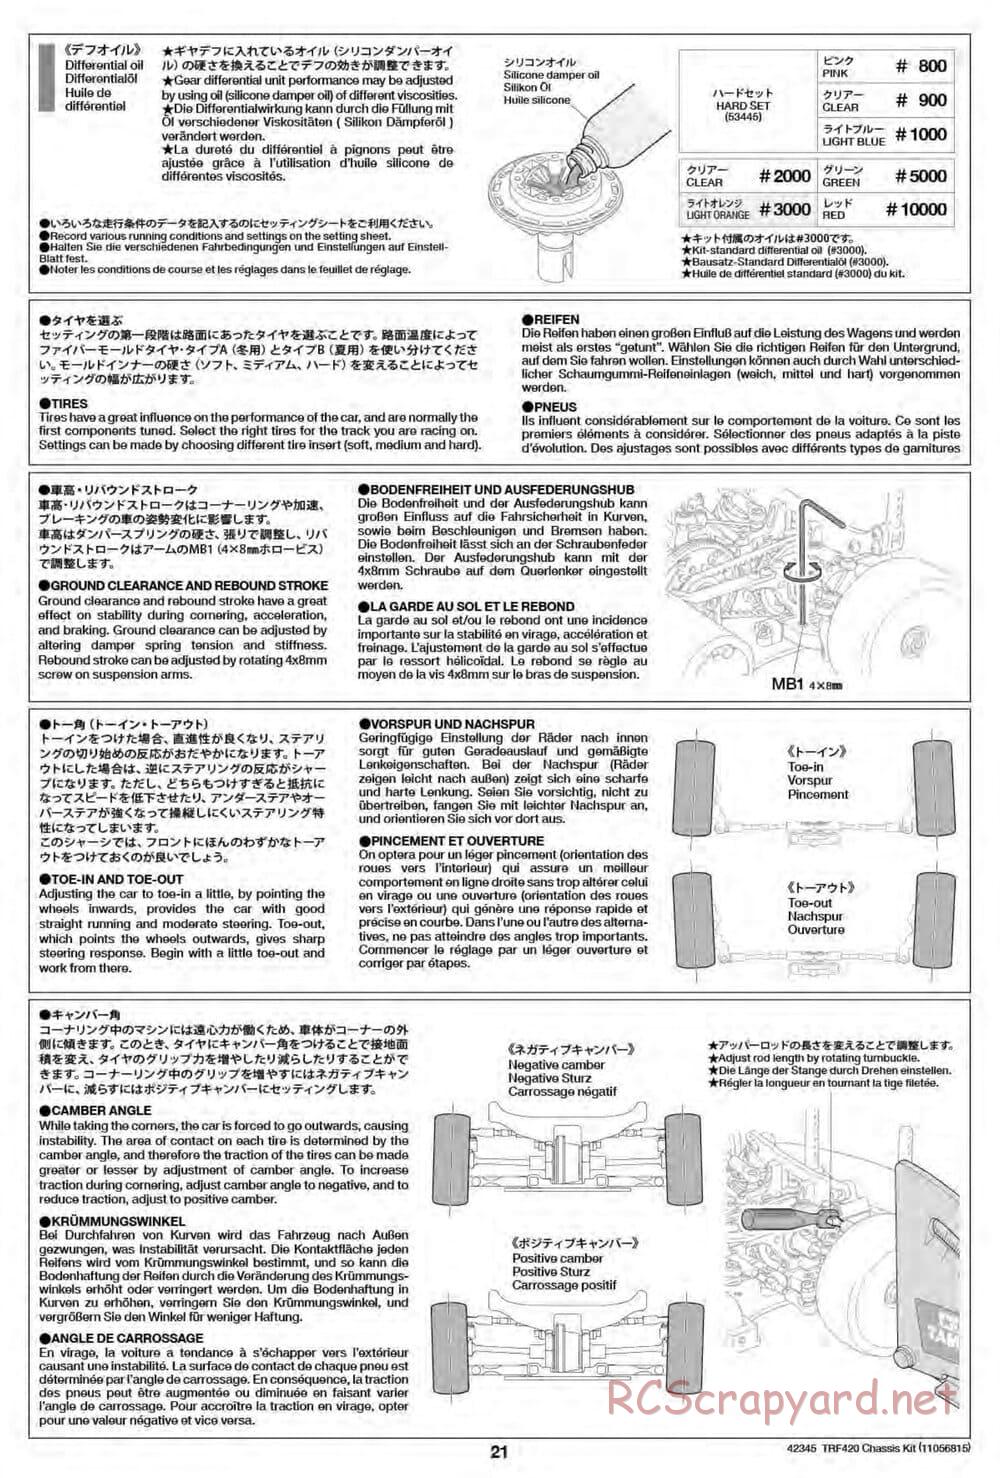 Tamiya - TRF420 Chassis - Manual - Page 21